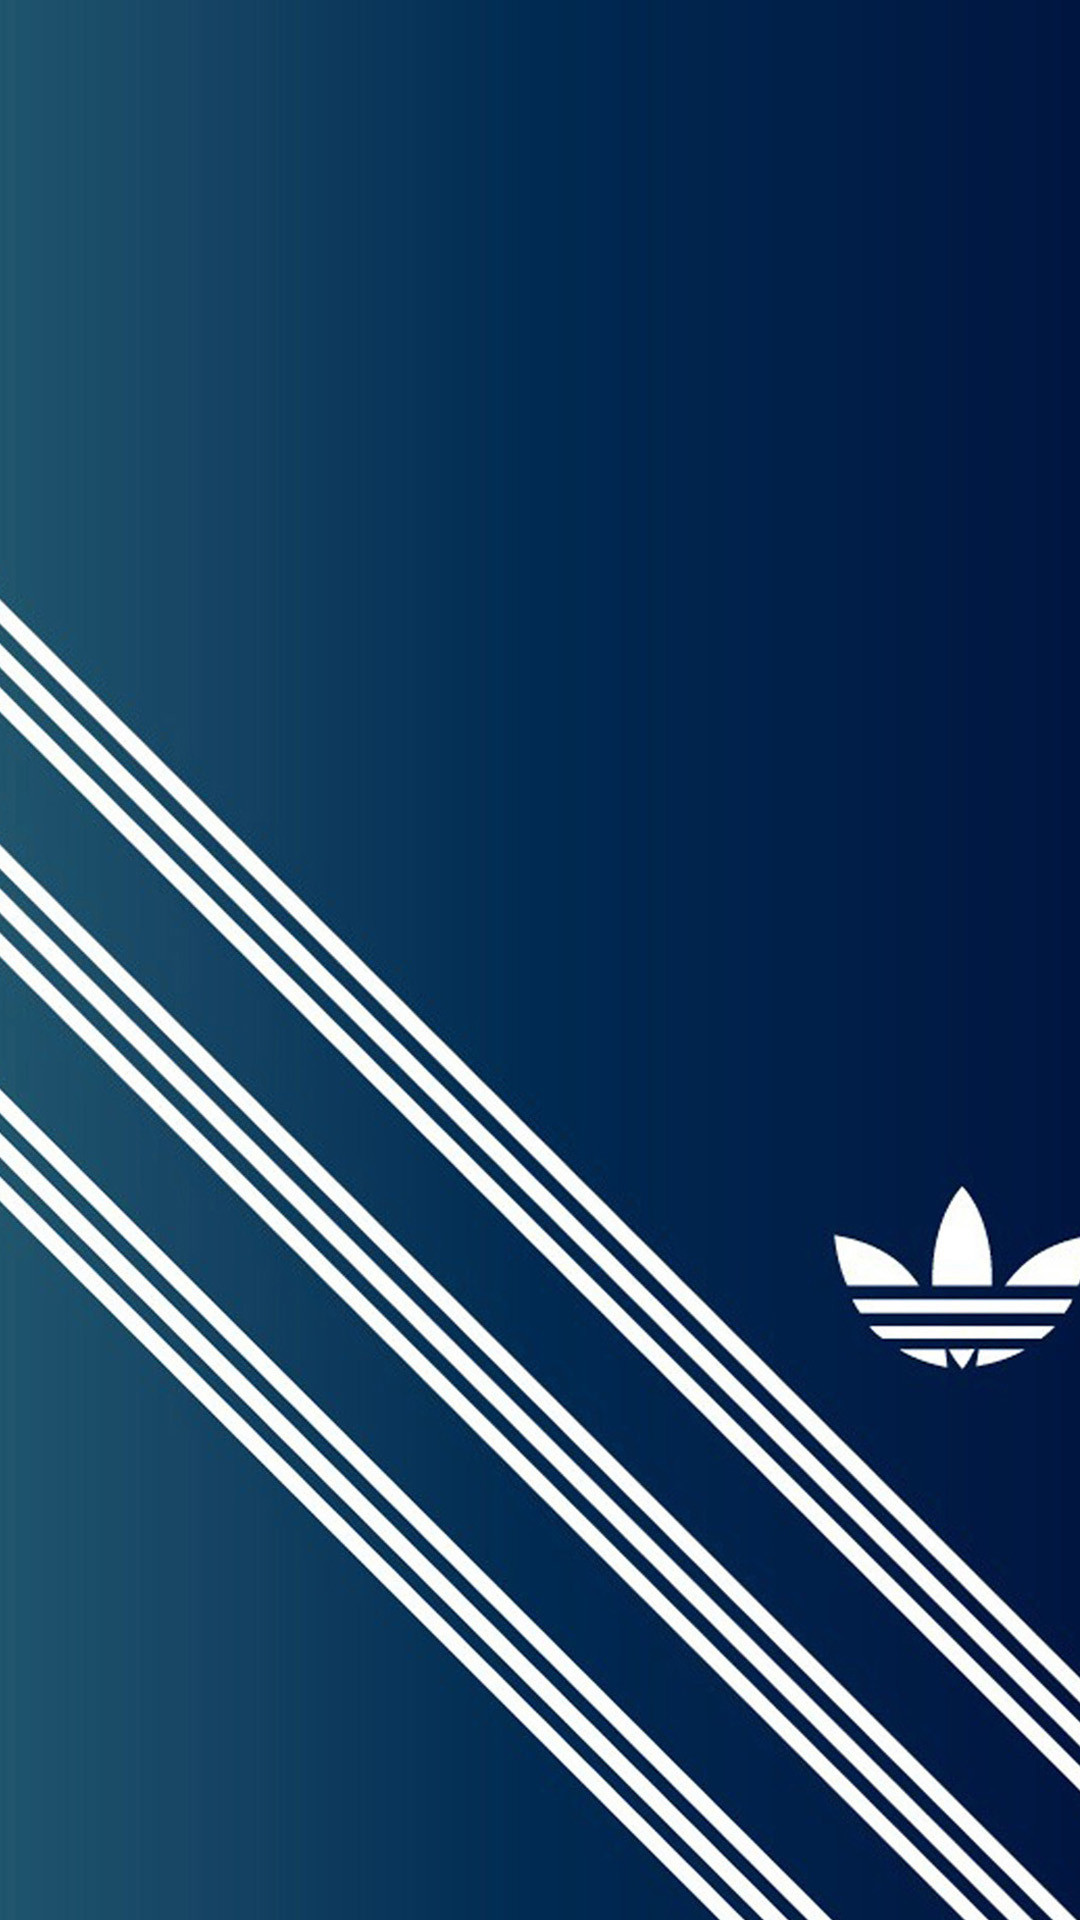 Adidas Htc One M8 wallpaper